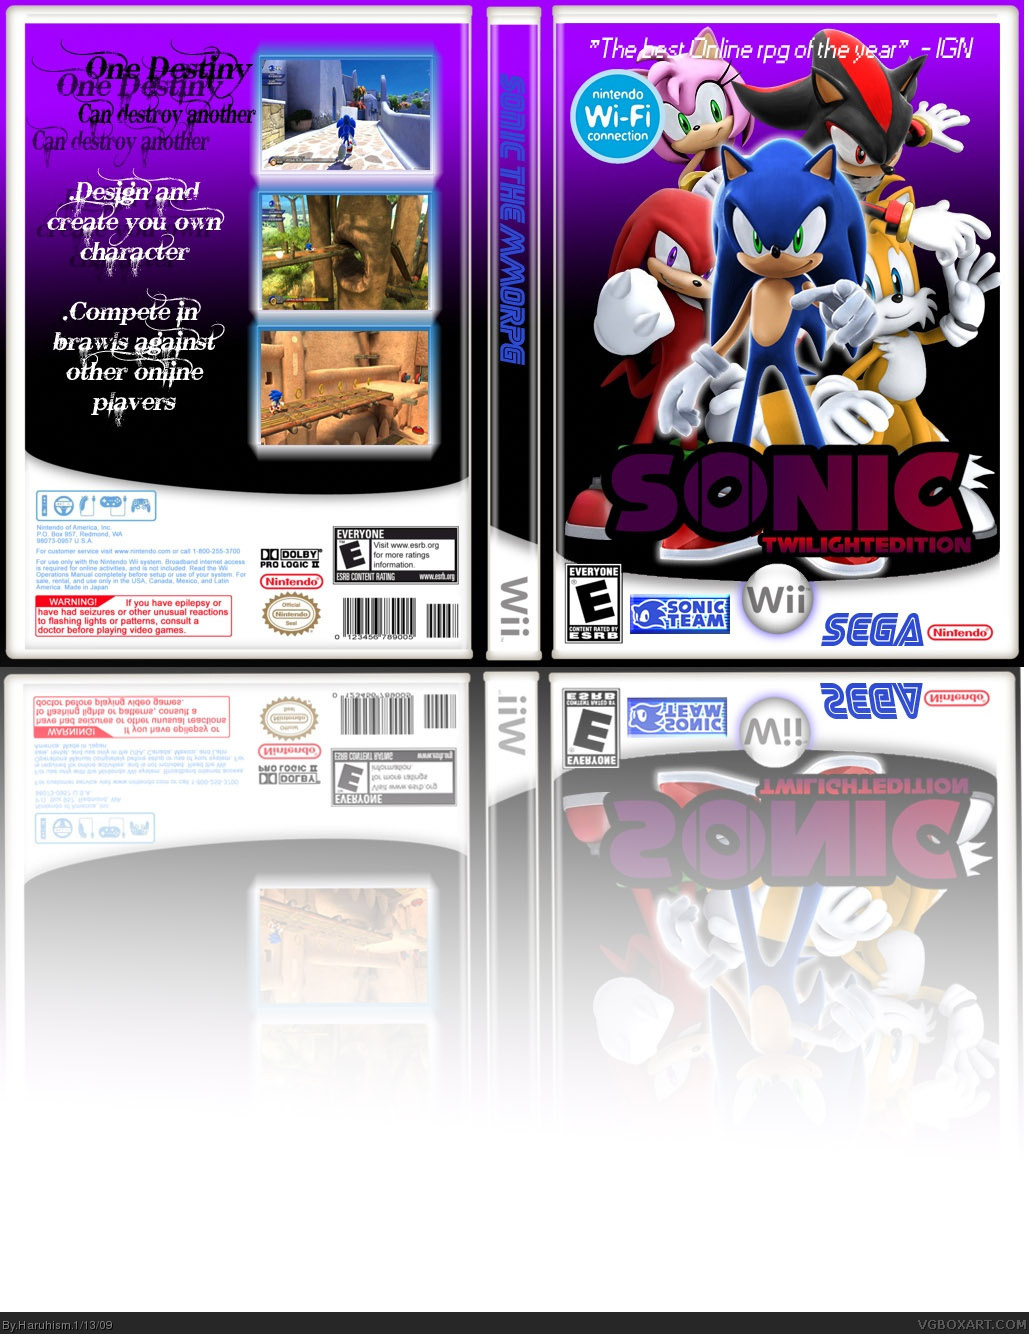 Sonic Twilight Edition box cover